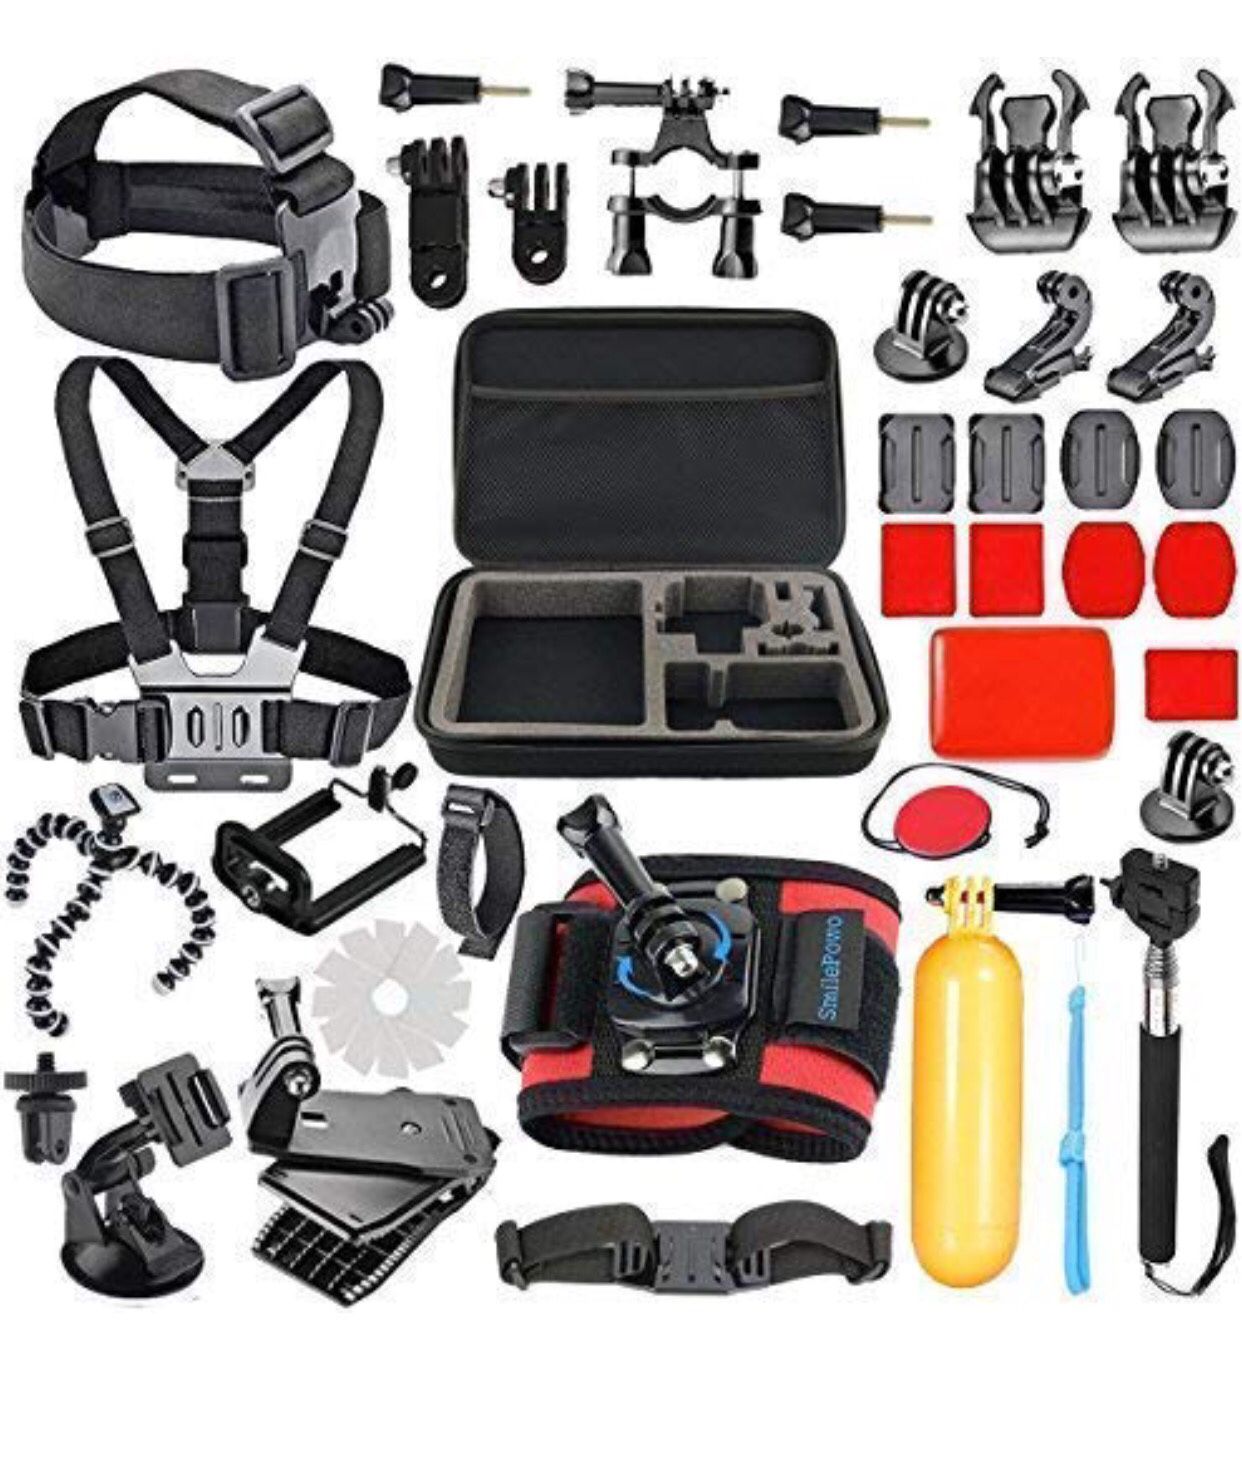 SmilePowo 42-in-1 Accessories Kit for GoPro HERO7 Black/White/Sliver/GoPro Fusion/HERO6 Black /HERO5 Black/HERO Session/HERO4 Black/Silver/AKASO/Camp